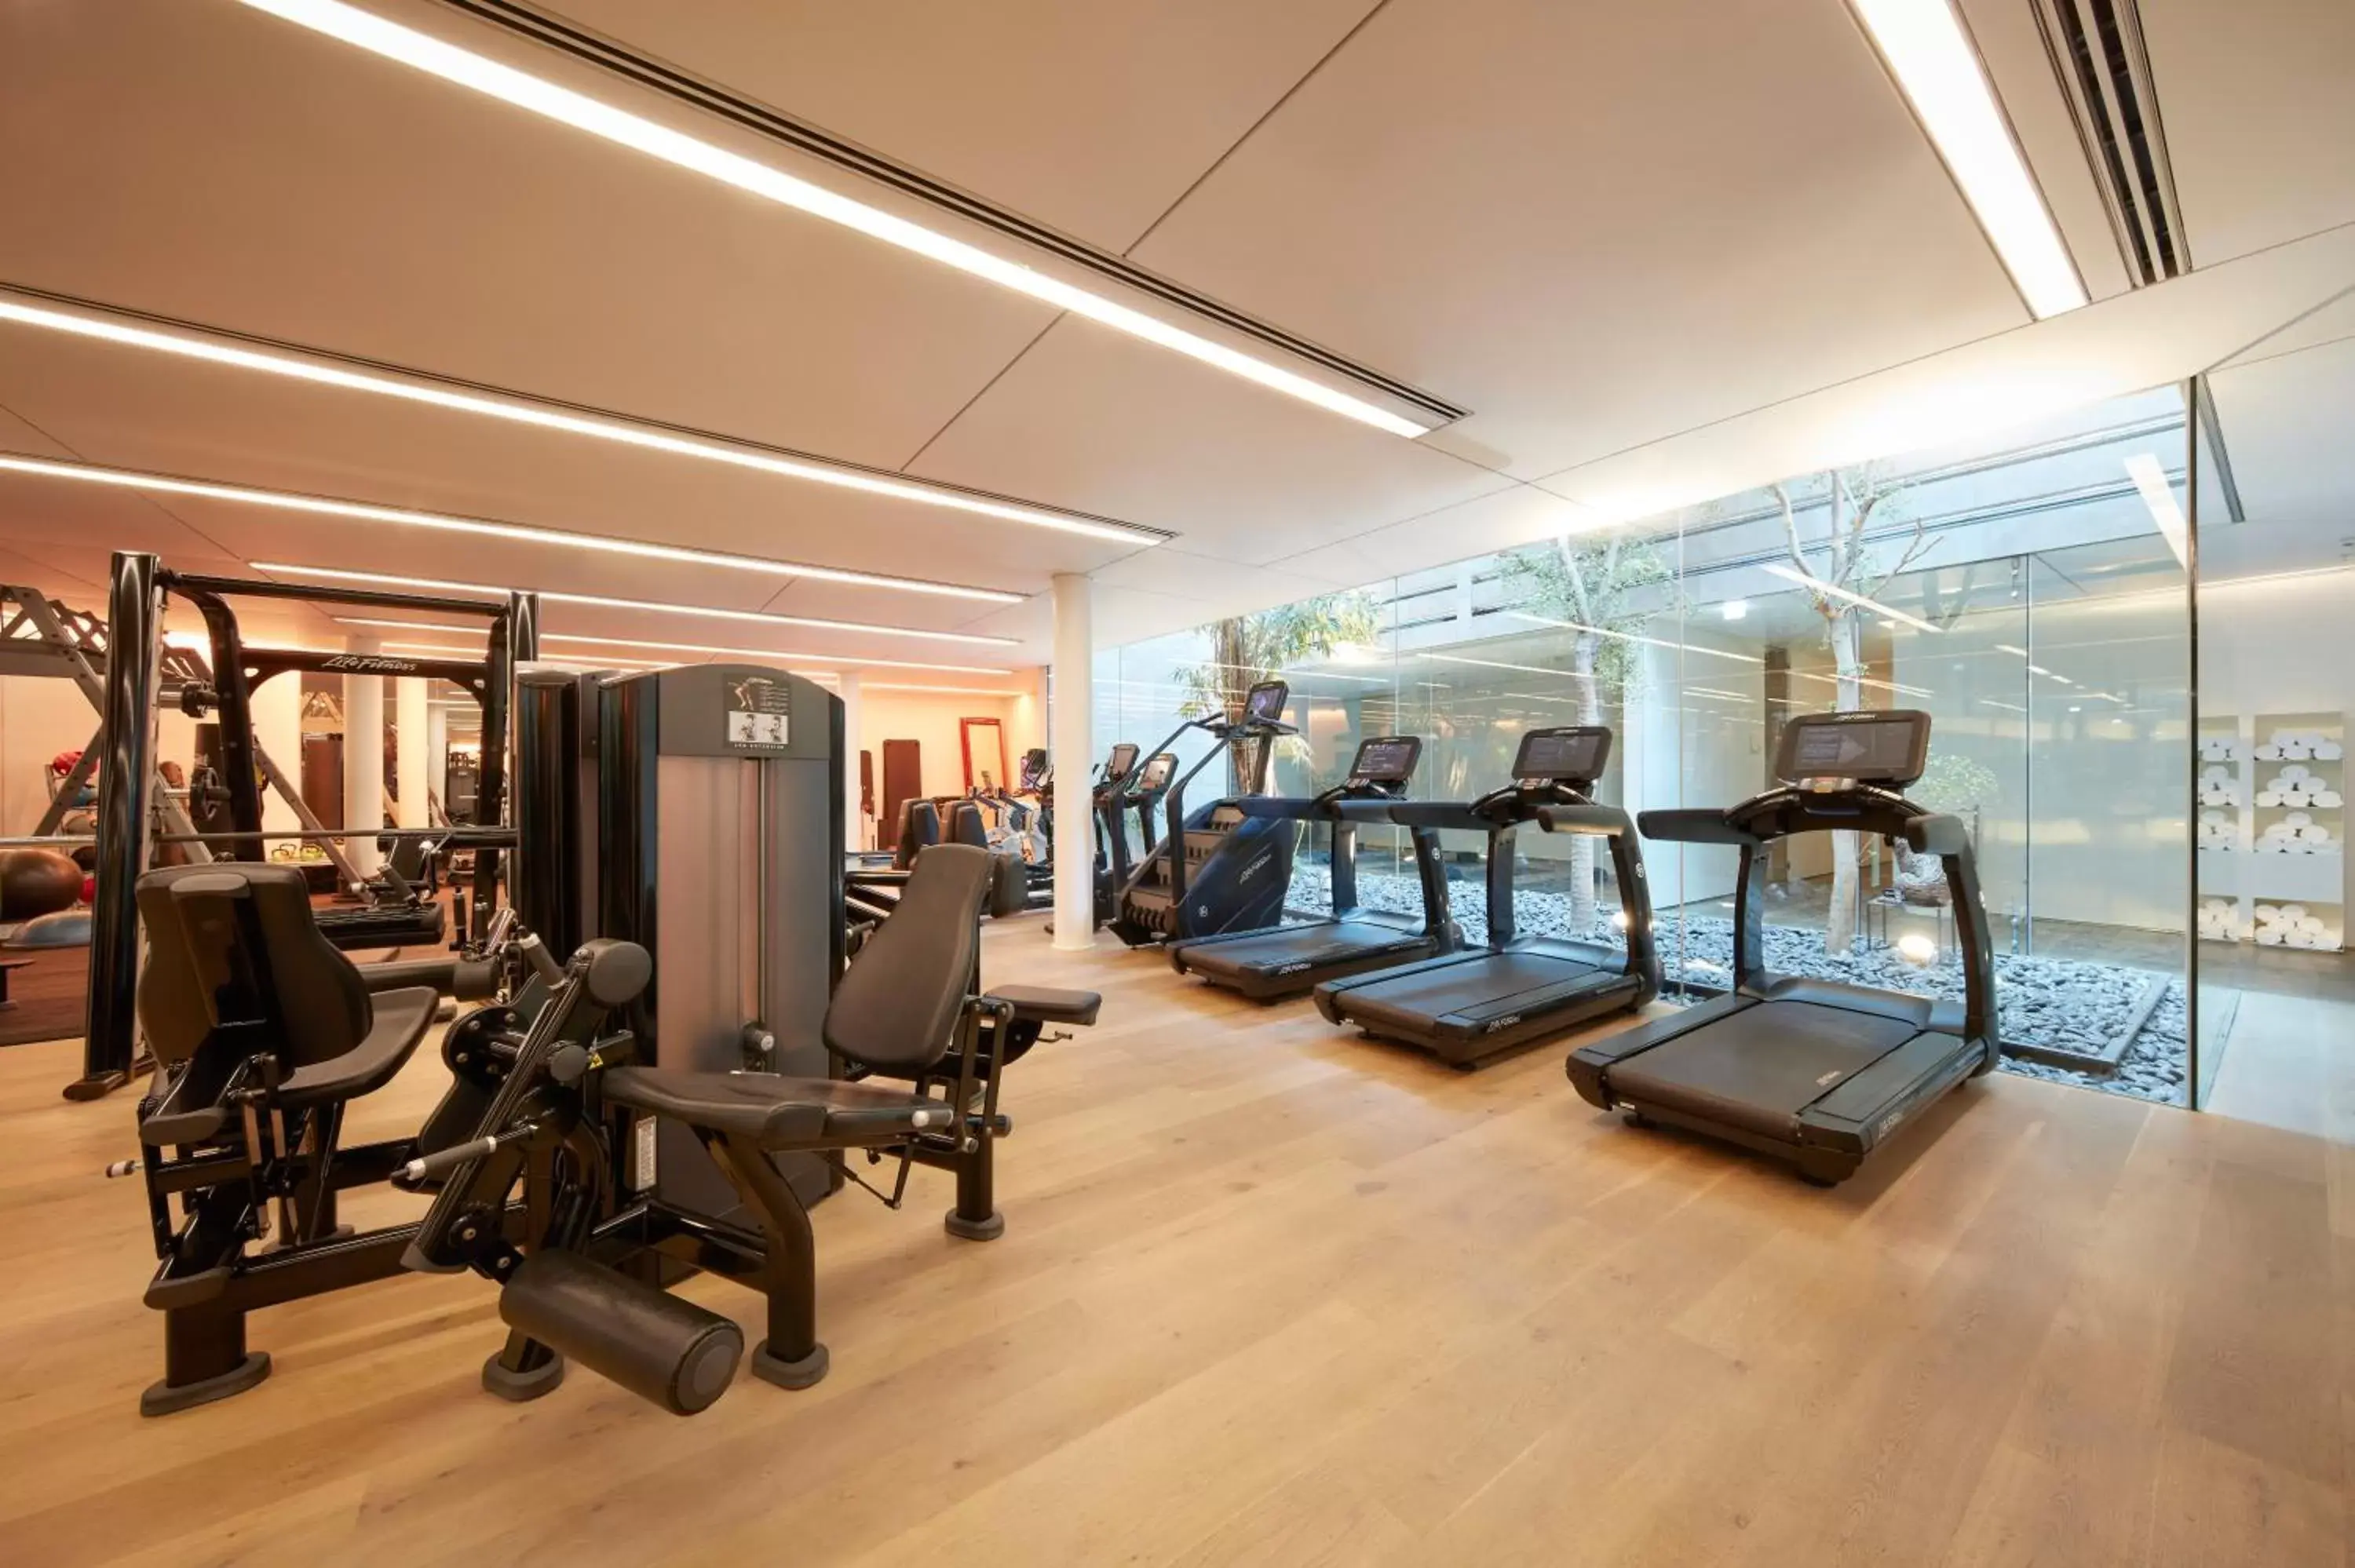 Fitness centre/facilities, Fitness Center/Facilities in Conservatorium Hotel